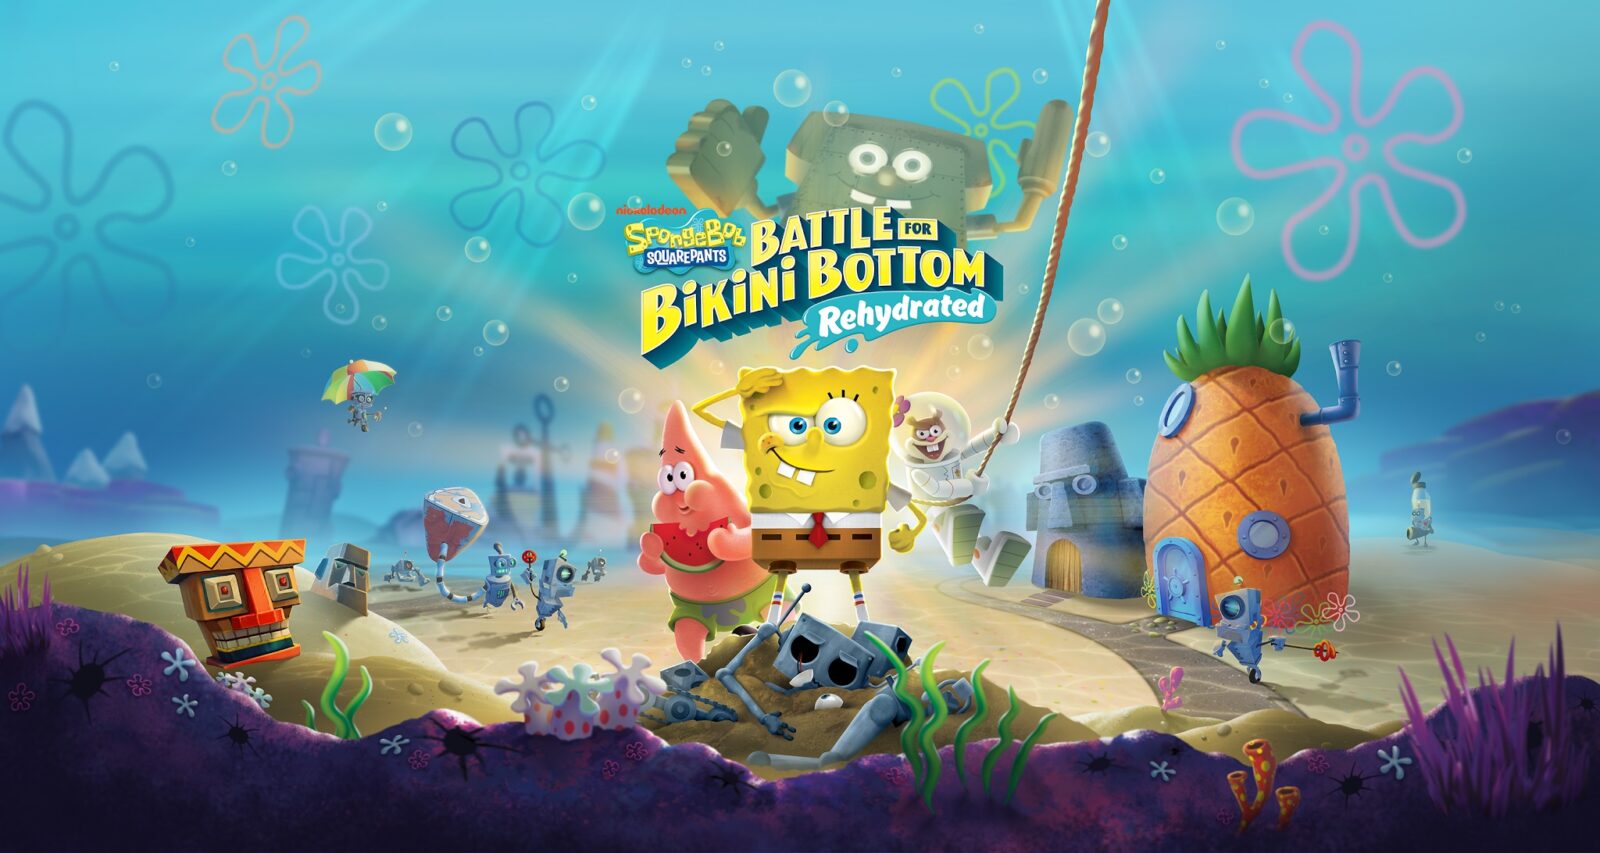 SpongeBob SquarePants: Battle for Bikini Bottom Rehydrated mobile